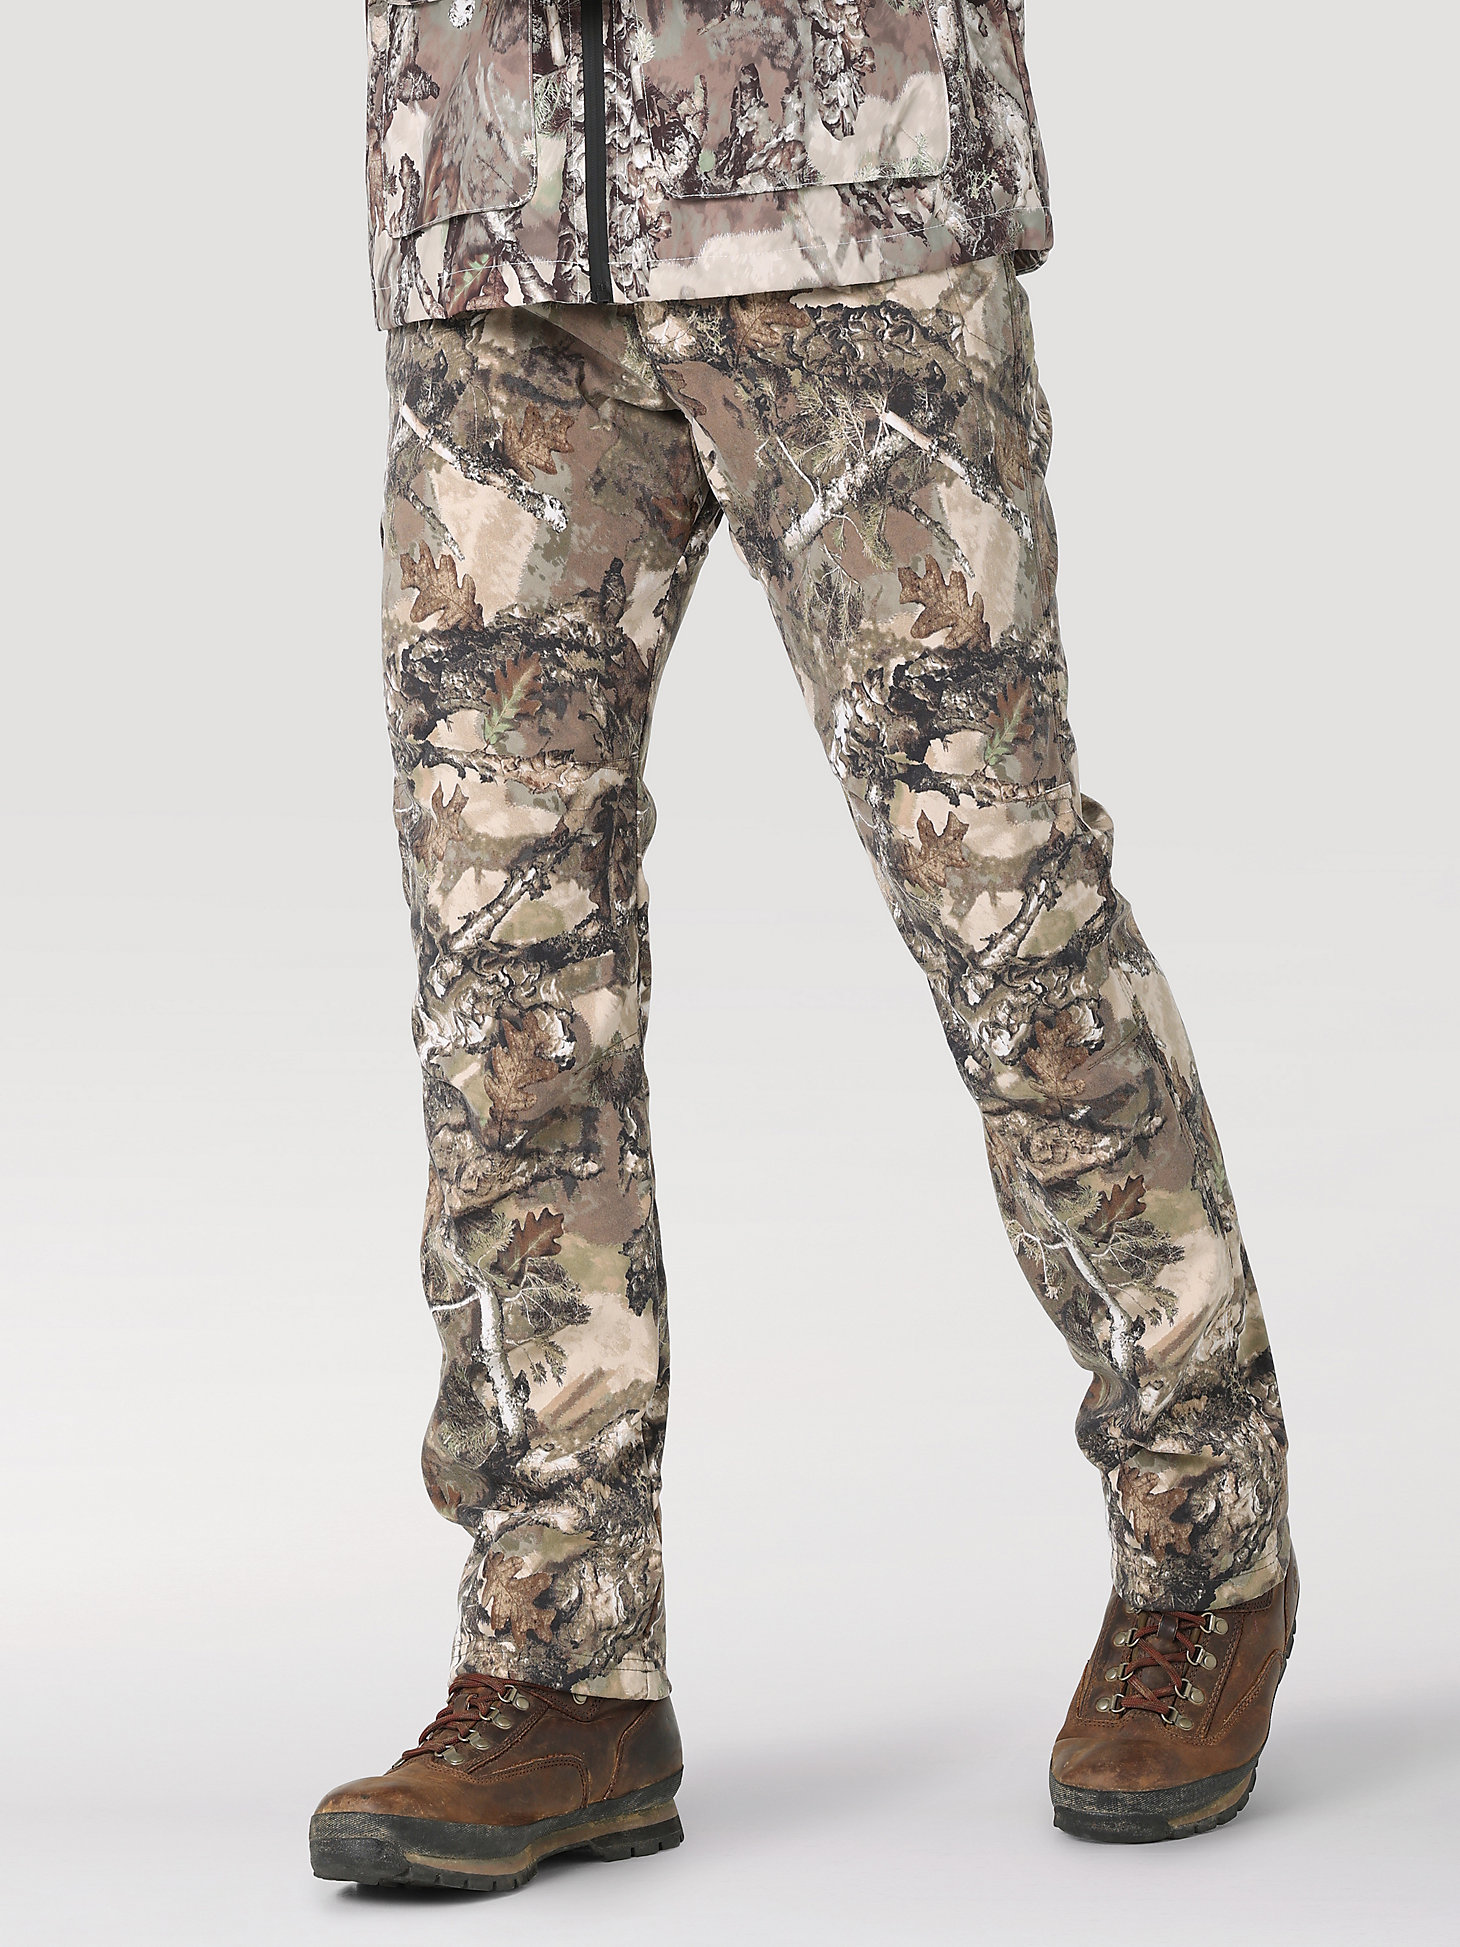 ATG Hunter™ Men's Fleece Lined Utility Pant in Warmwoods Camo alternative view 1